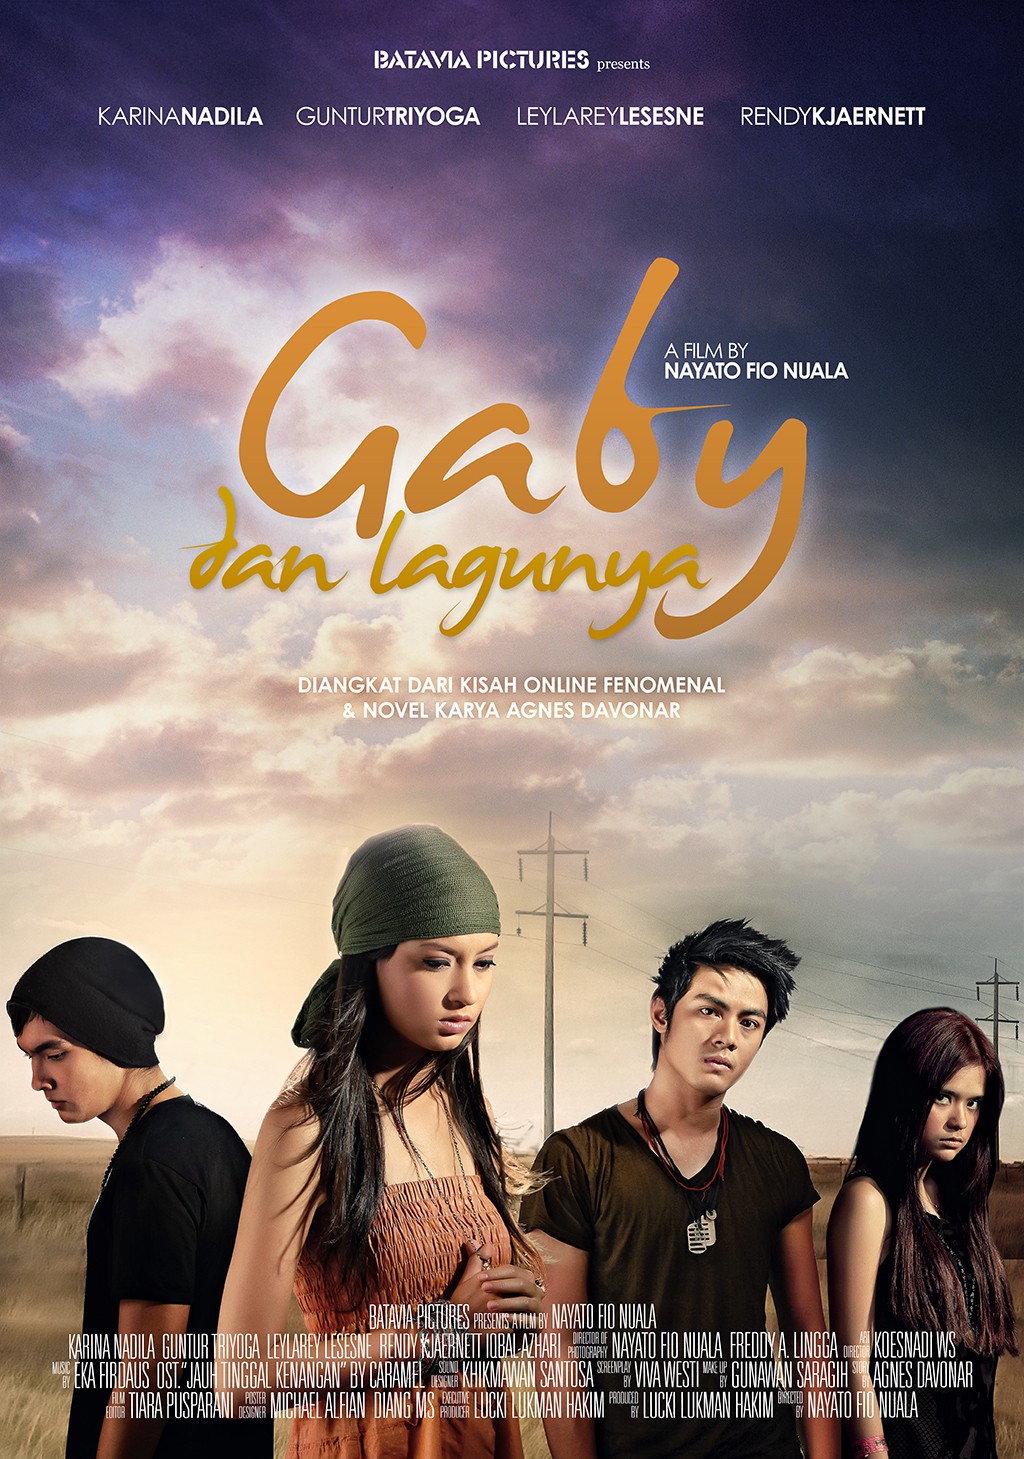 Extra Large Movie Poster Image for Gaby dan lagunya 